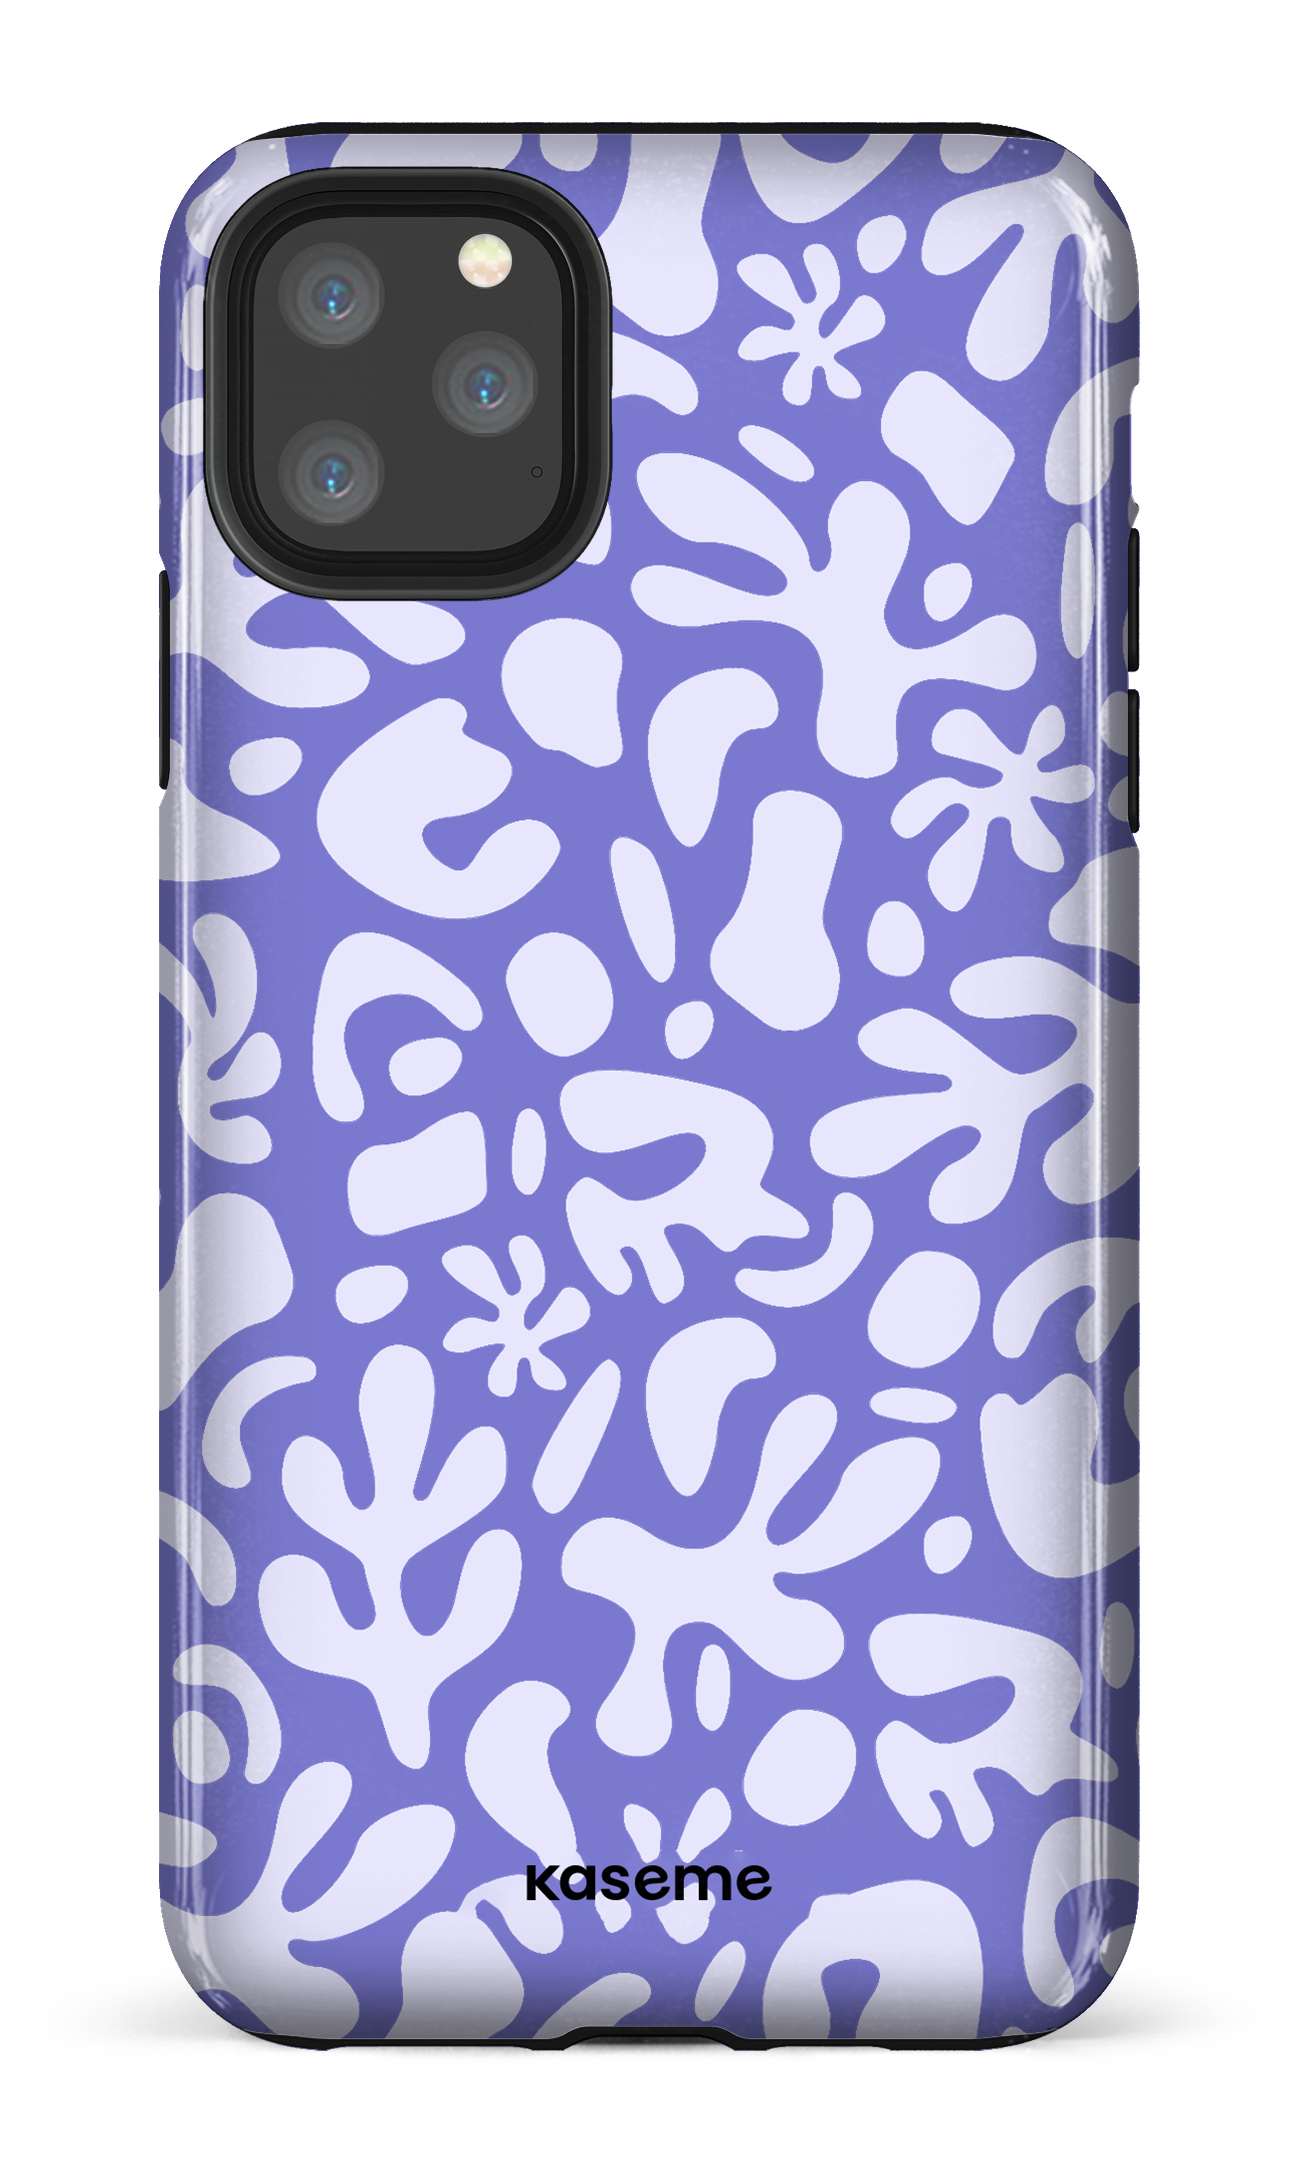 Lavish purple - iPhone 11 Pro Max